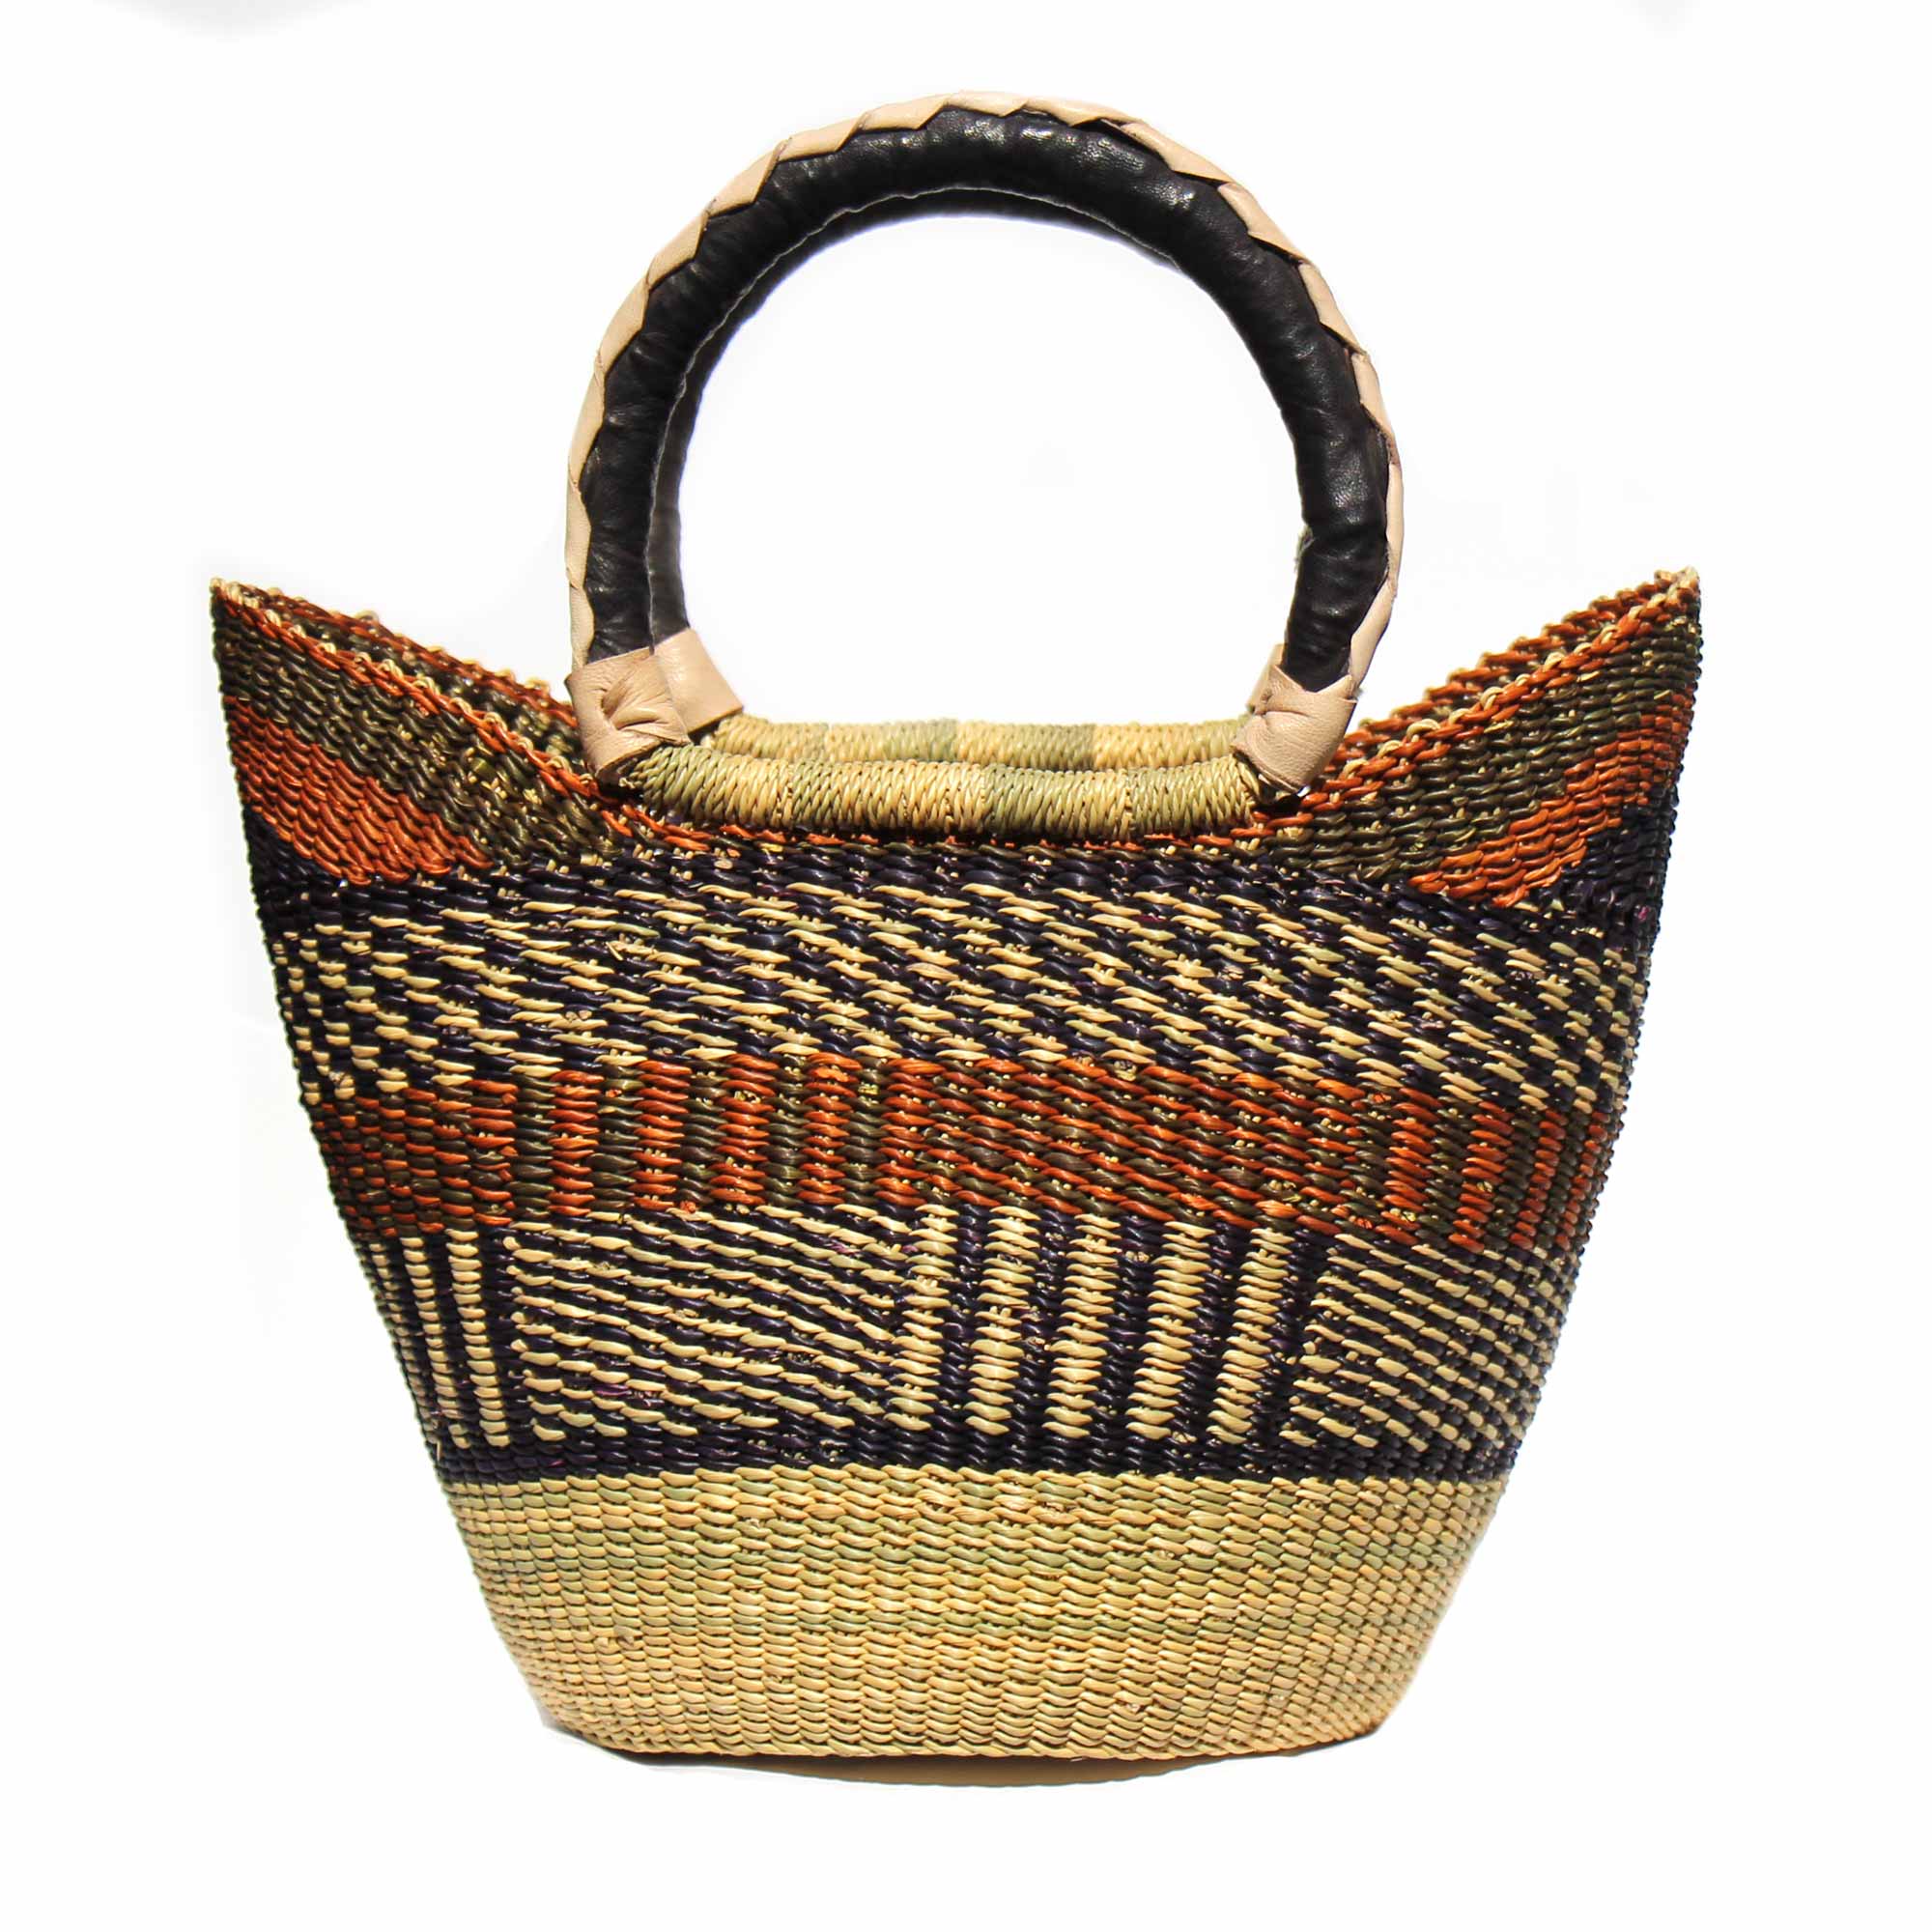 seagrass handbag straw market basket bag| Alibaba.com